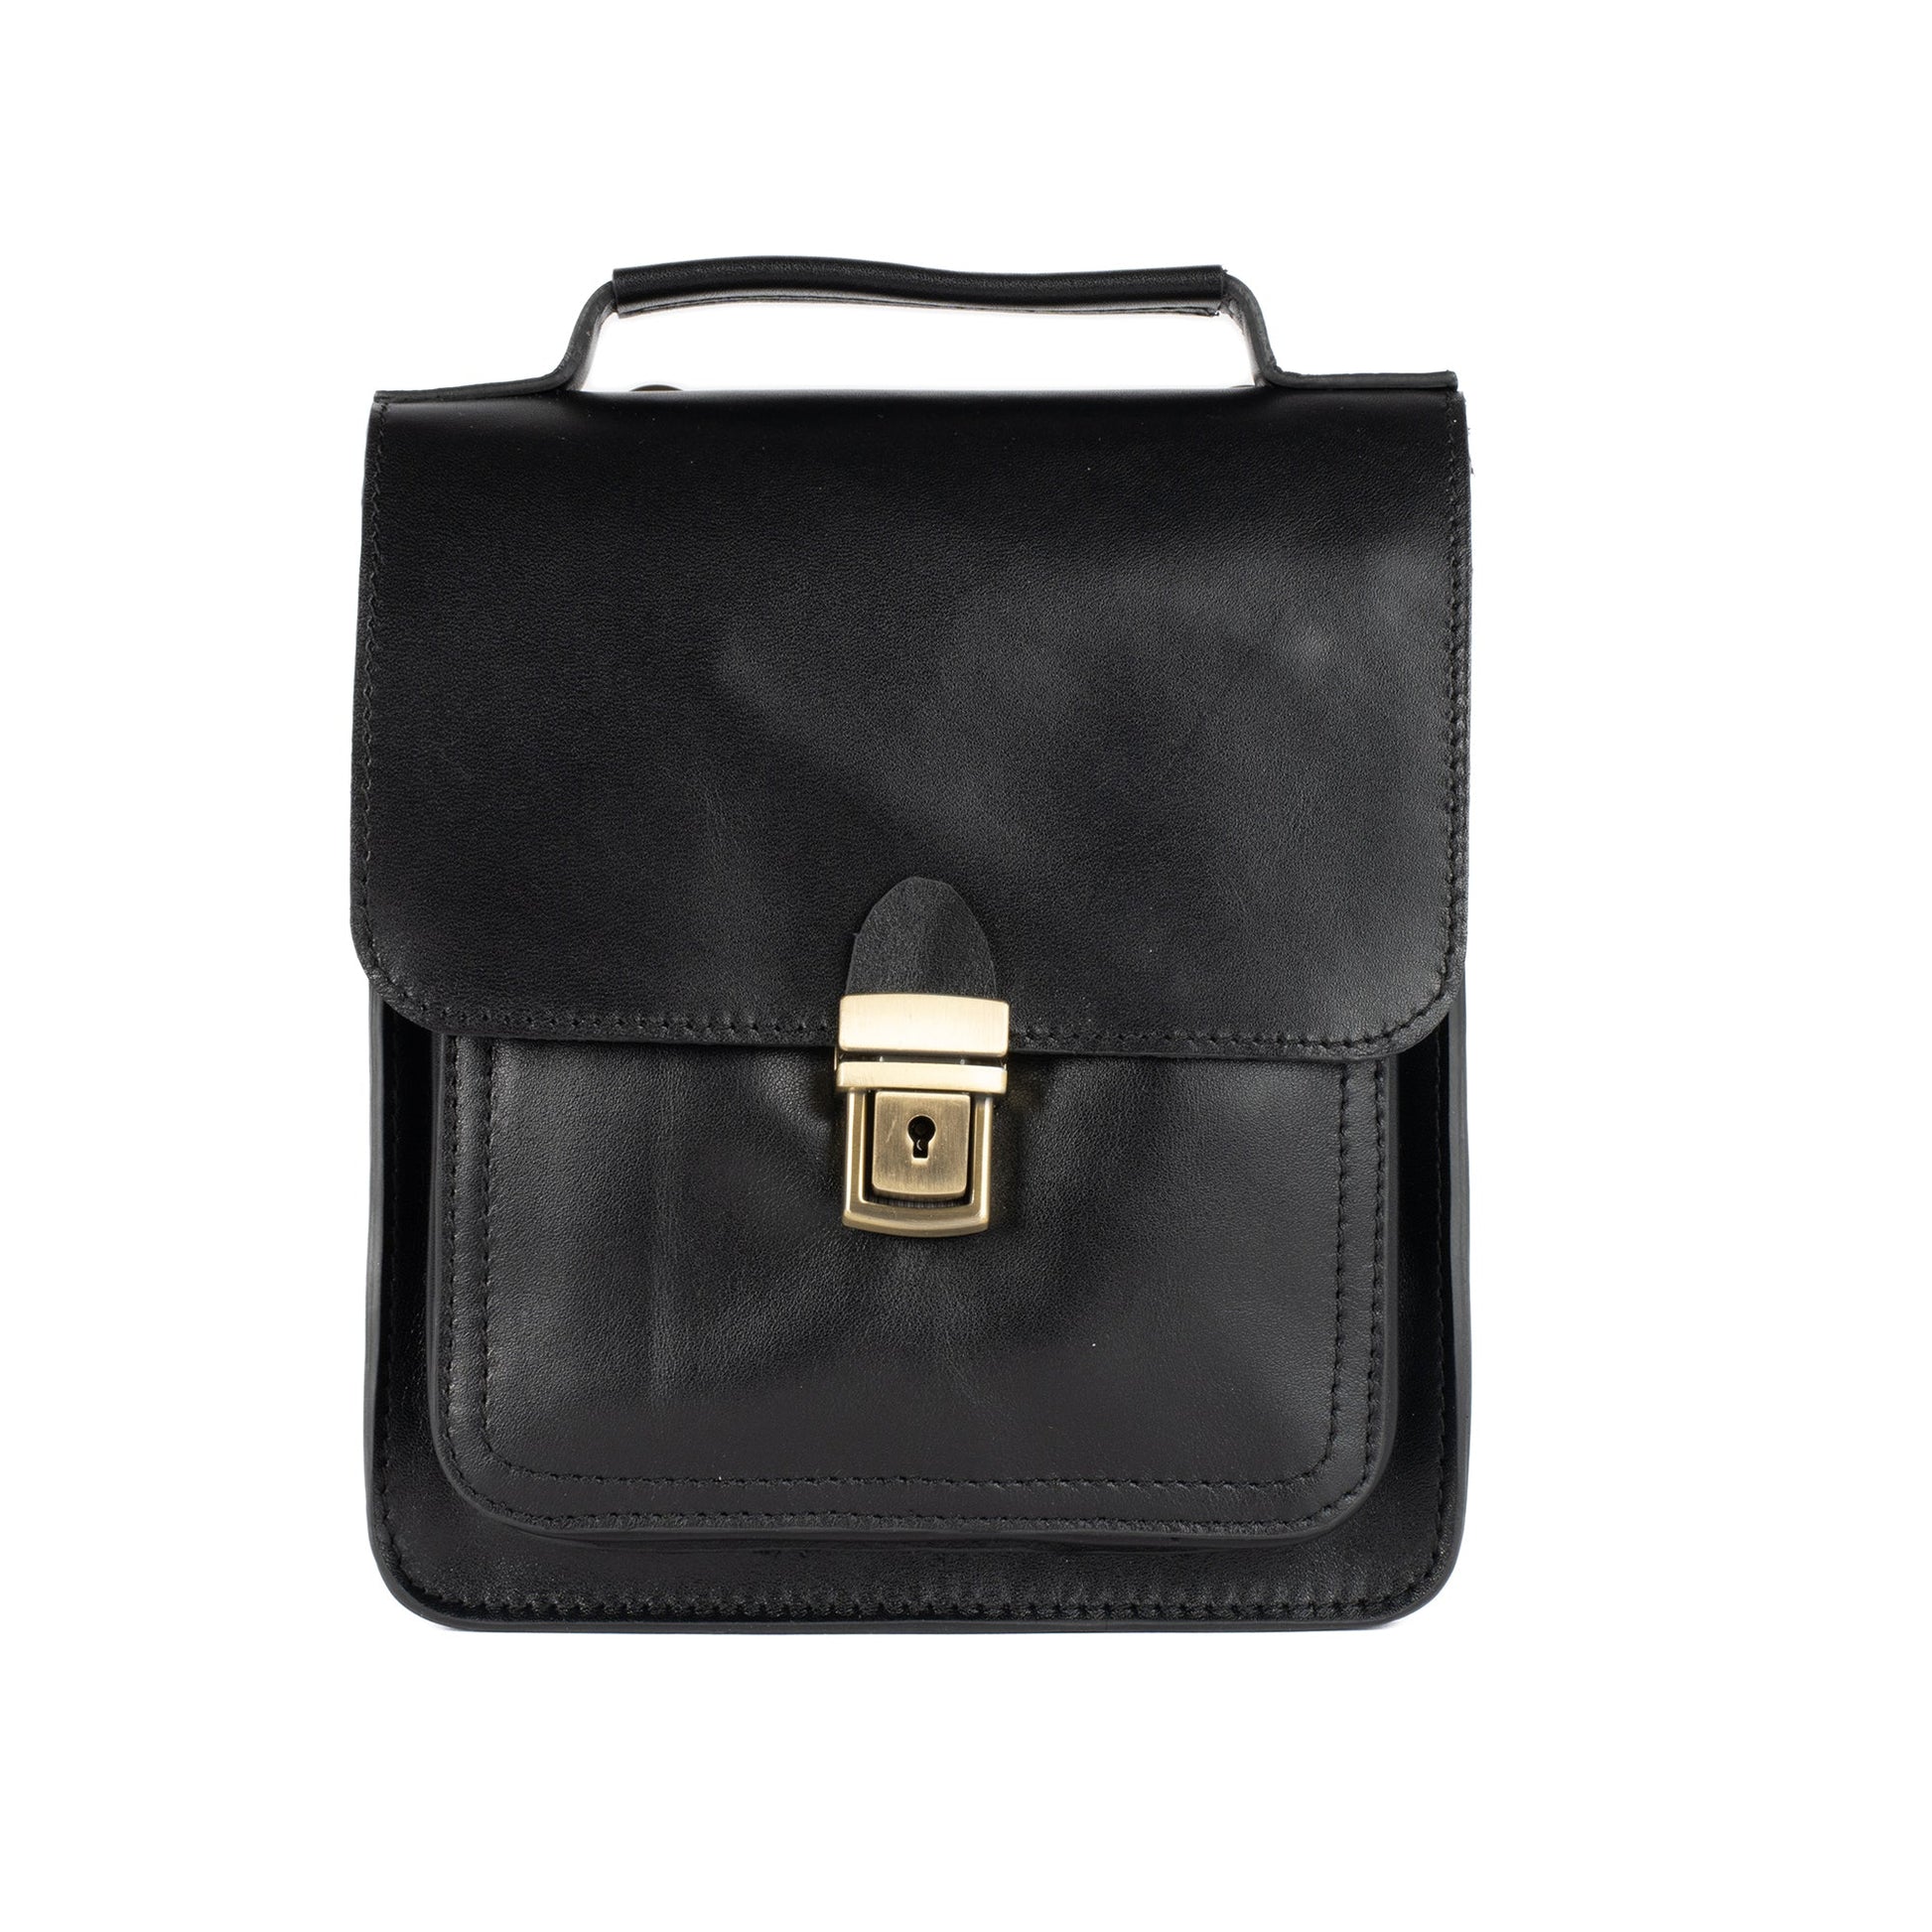 Zephyrion Leather Messenger Bag - Black - Bags Zengoda Shop online from Artisan Brands